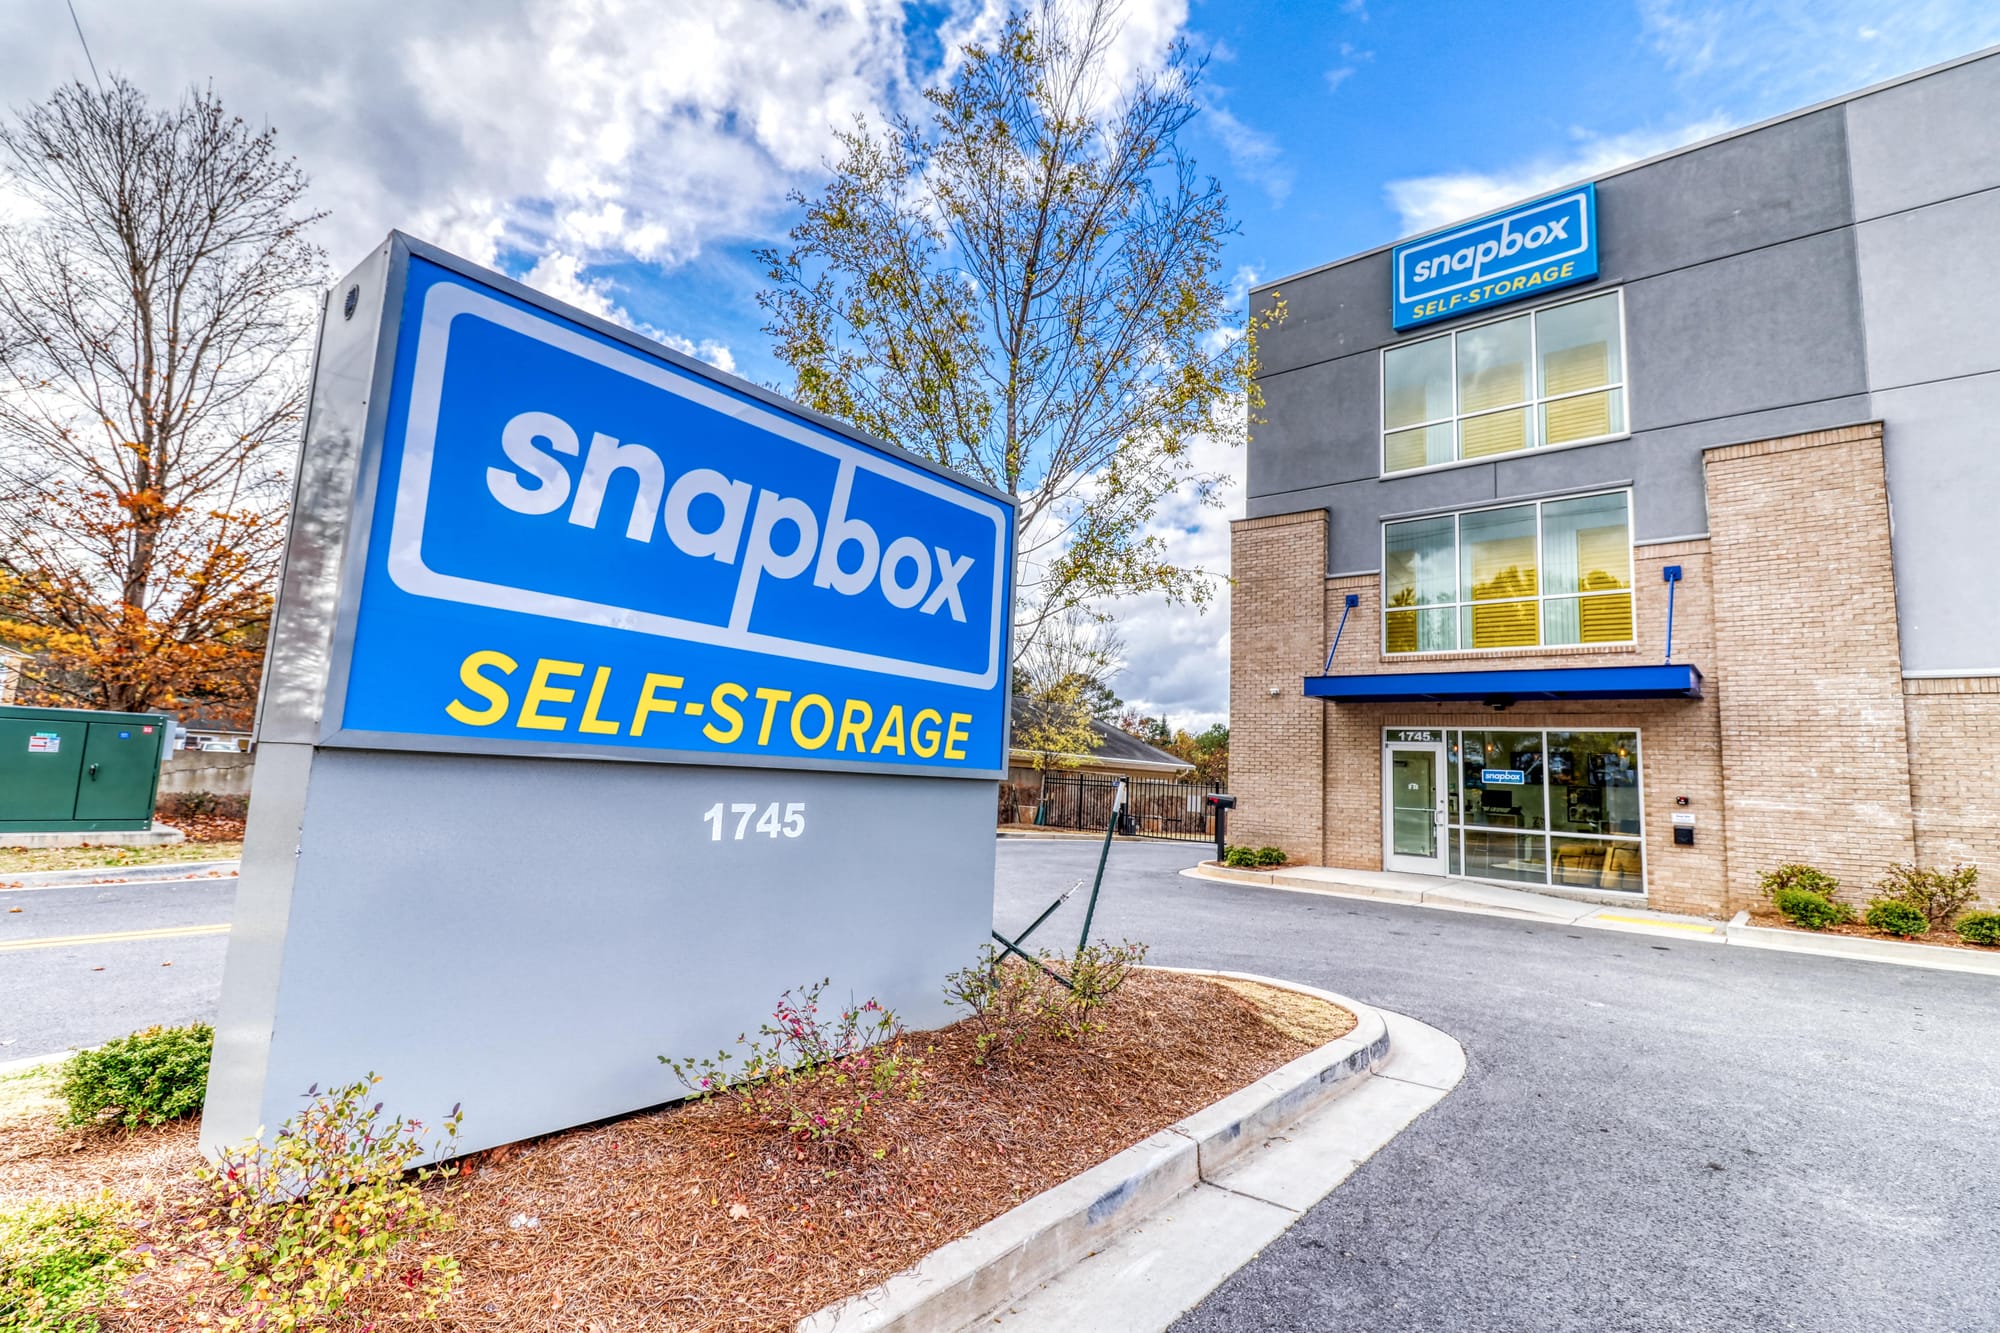 Snapbox Self Storage facility in Marietta, Georgia